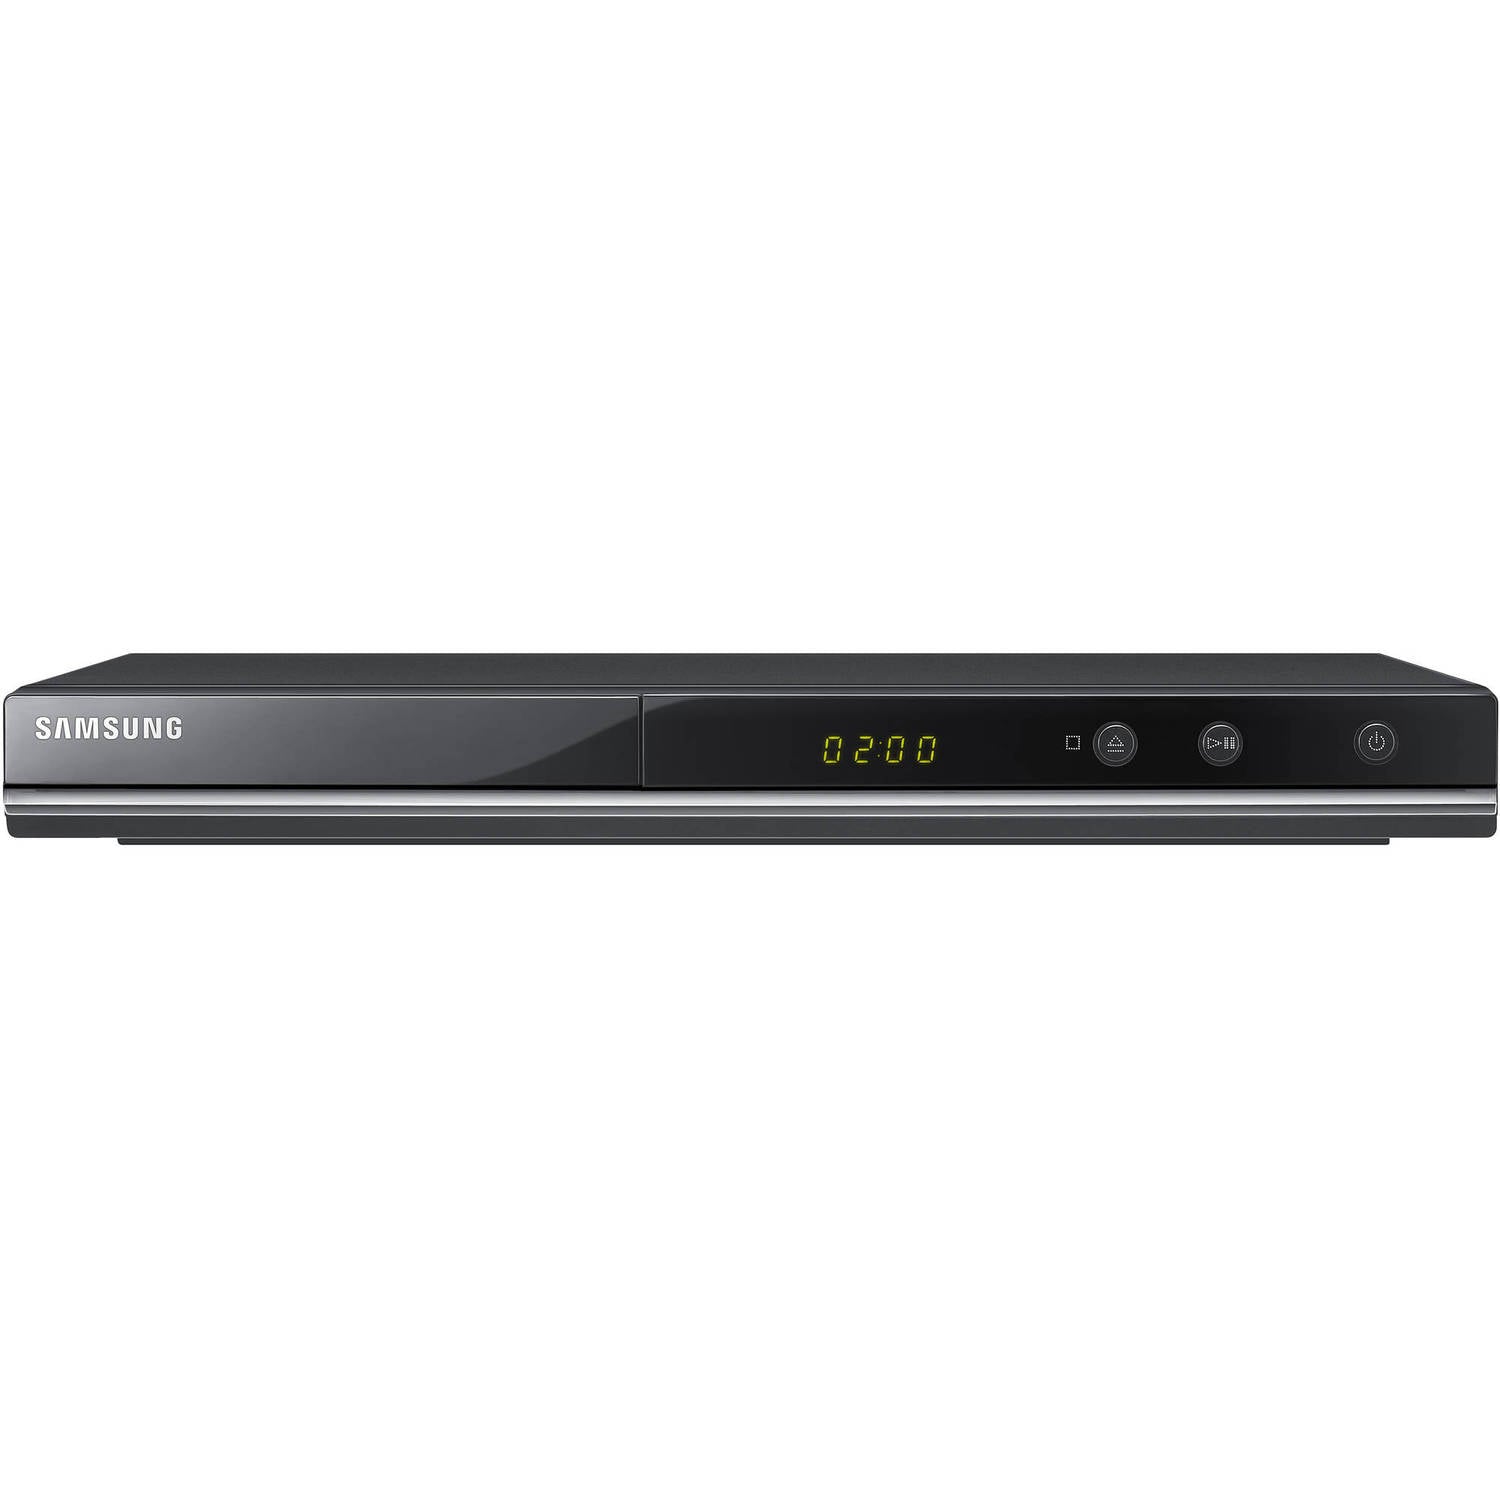 Samsung DVDC350/XAA DVD Player (Black)